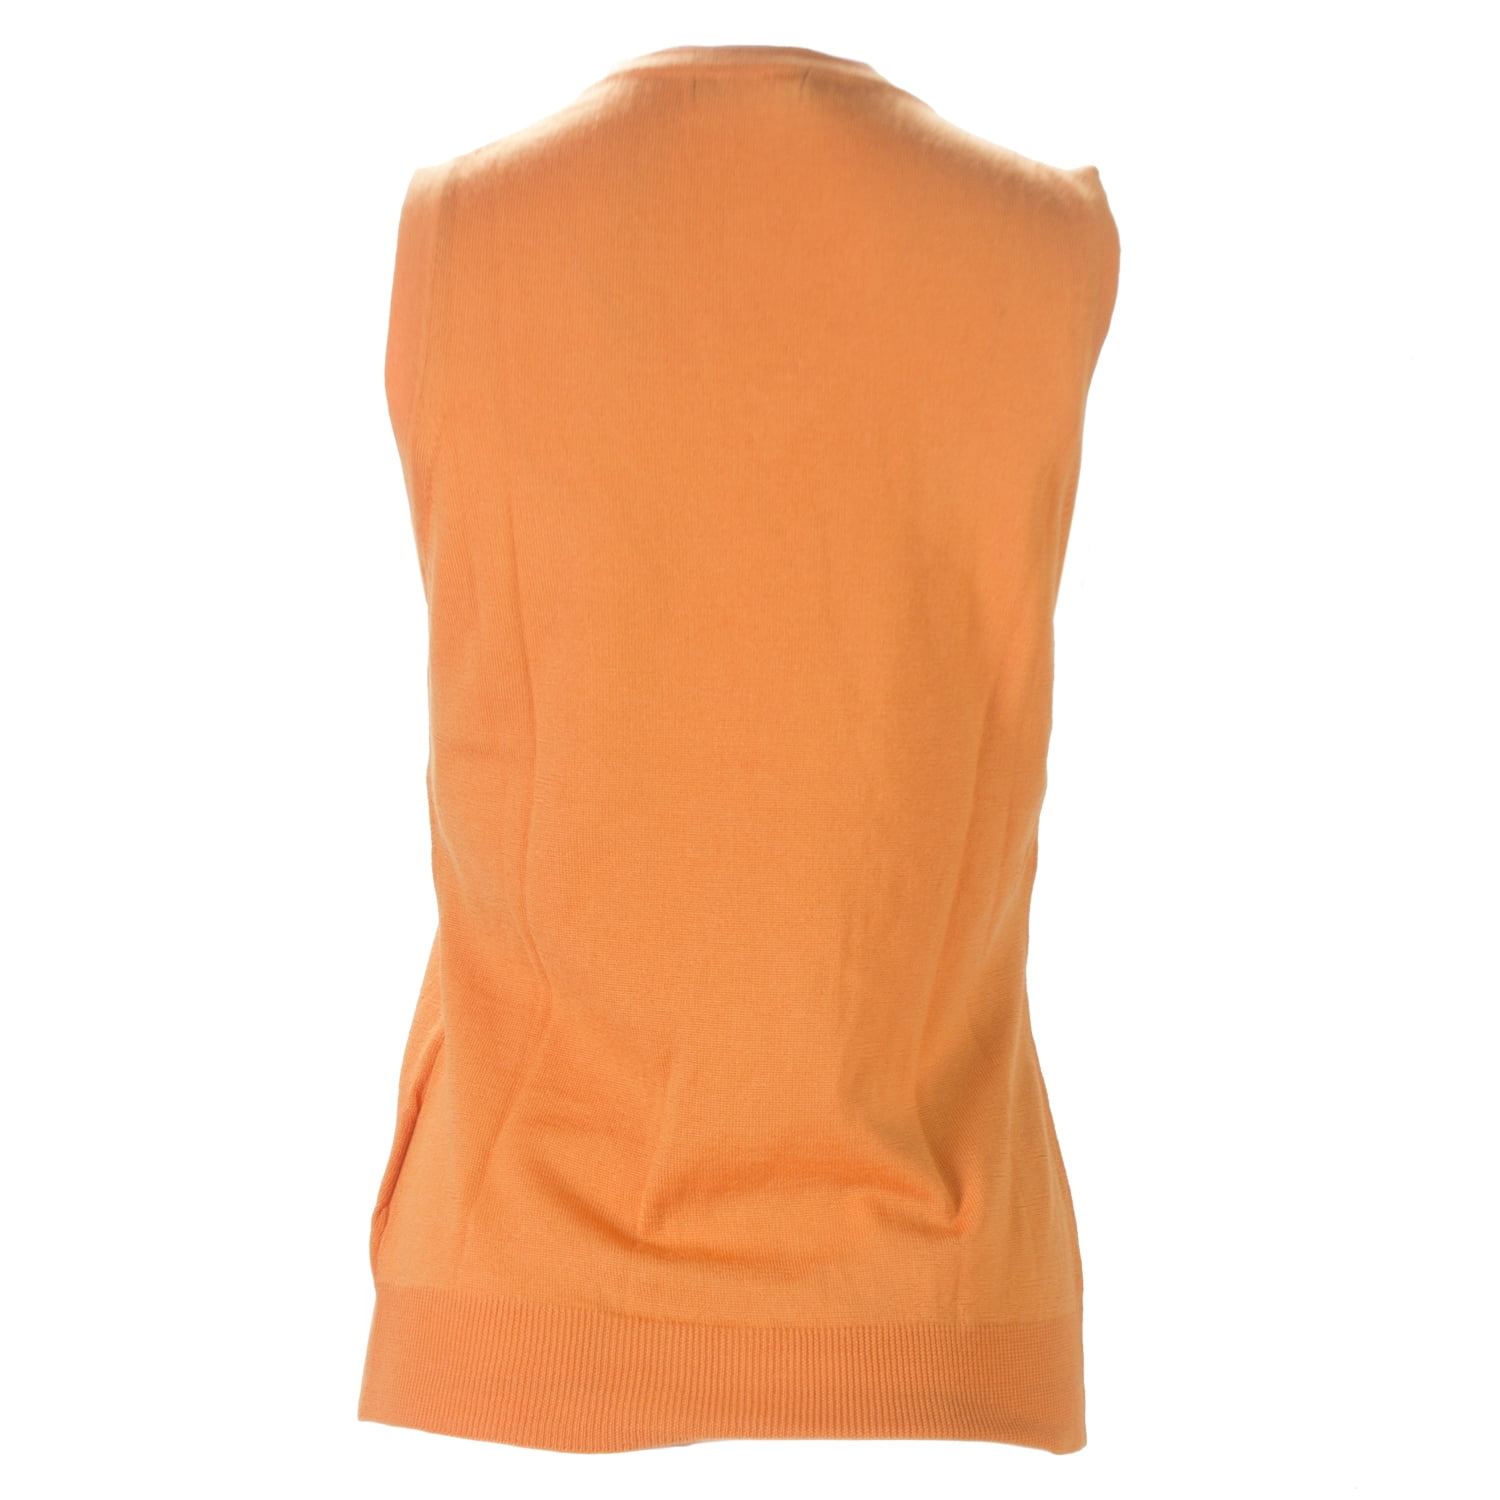 J. LINDEBERG Women's Aya Merino Knit Sweater Vest, Orange, X-Small -  Walmart.com